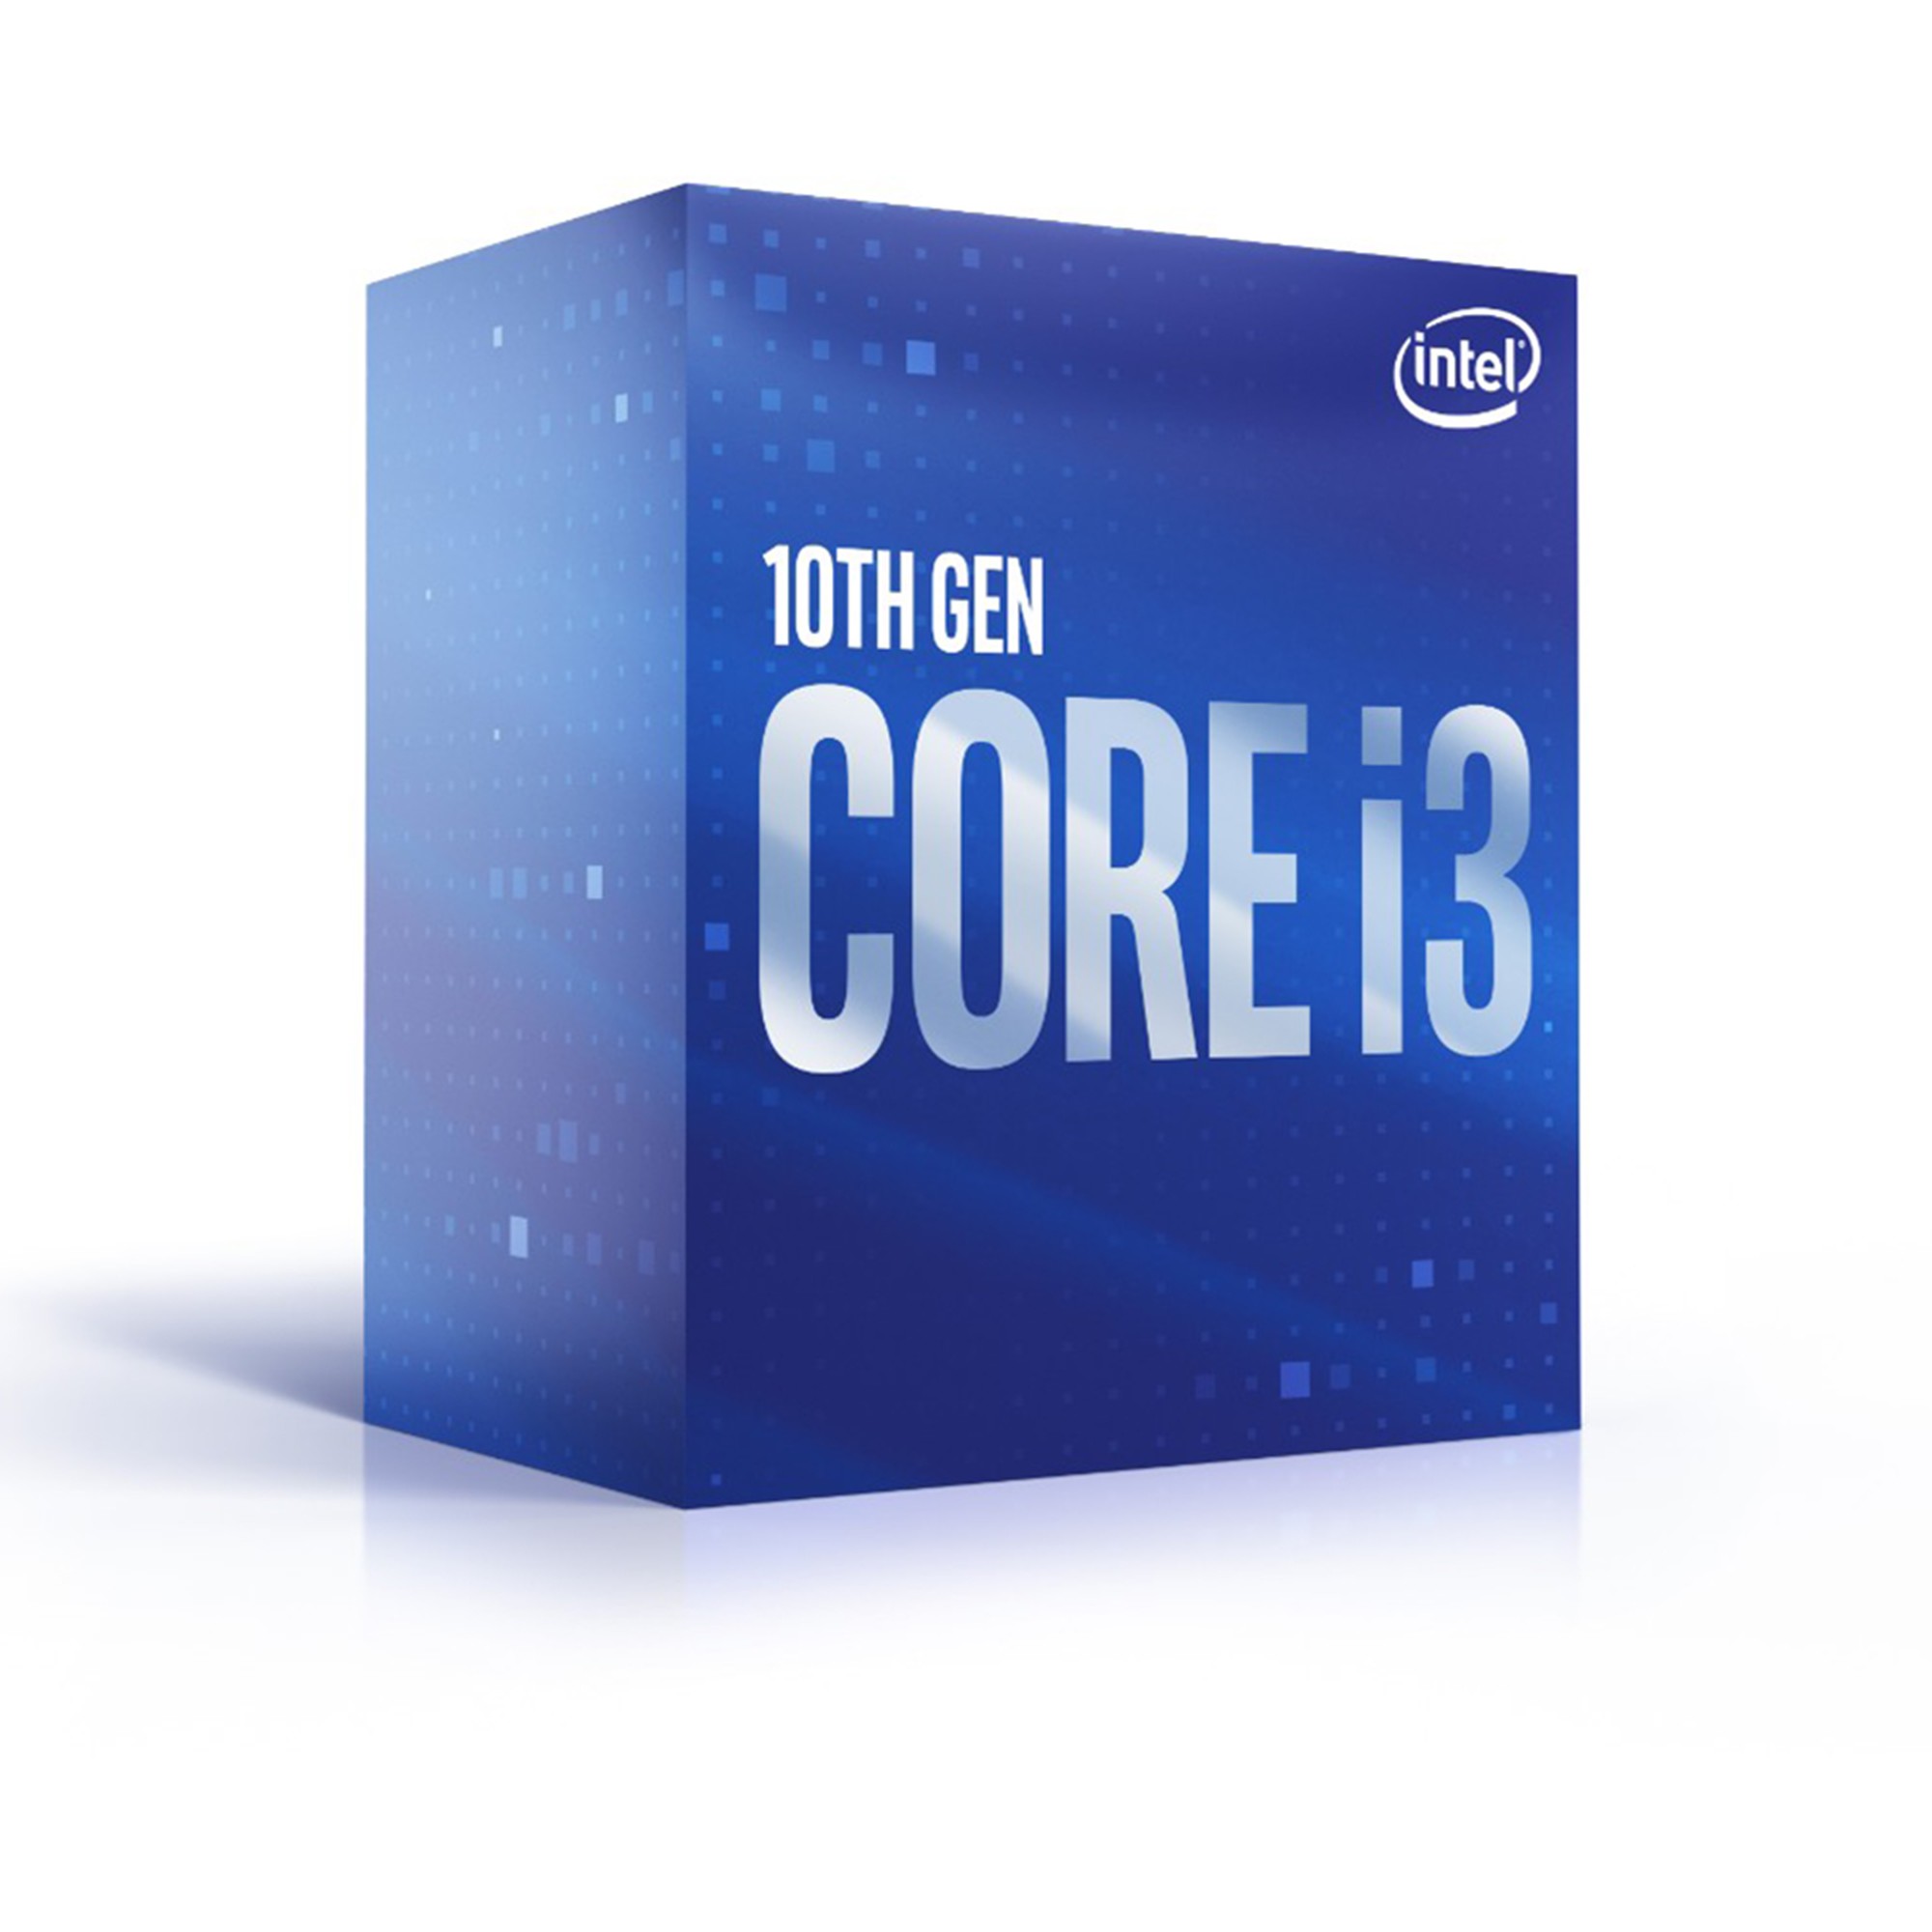 Intel Core i3-10100 processor